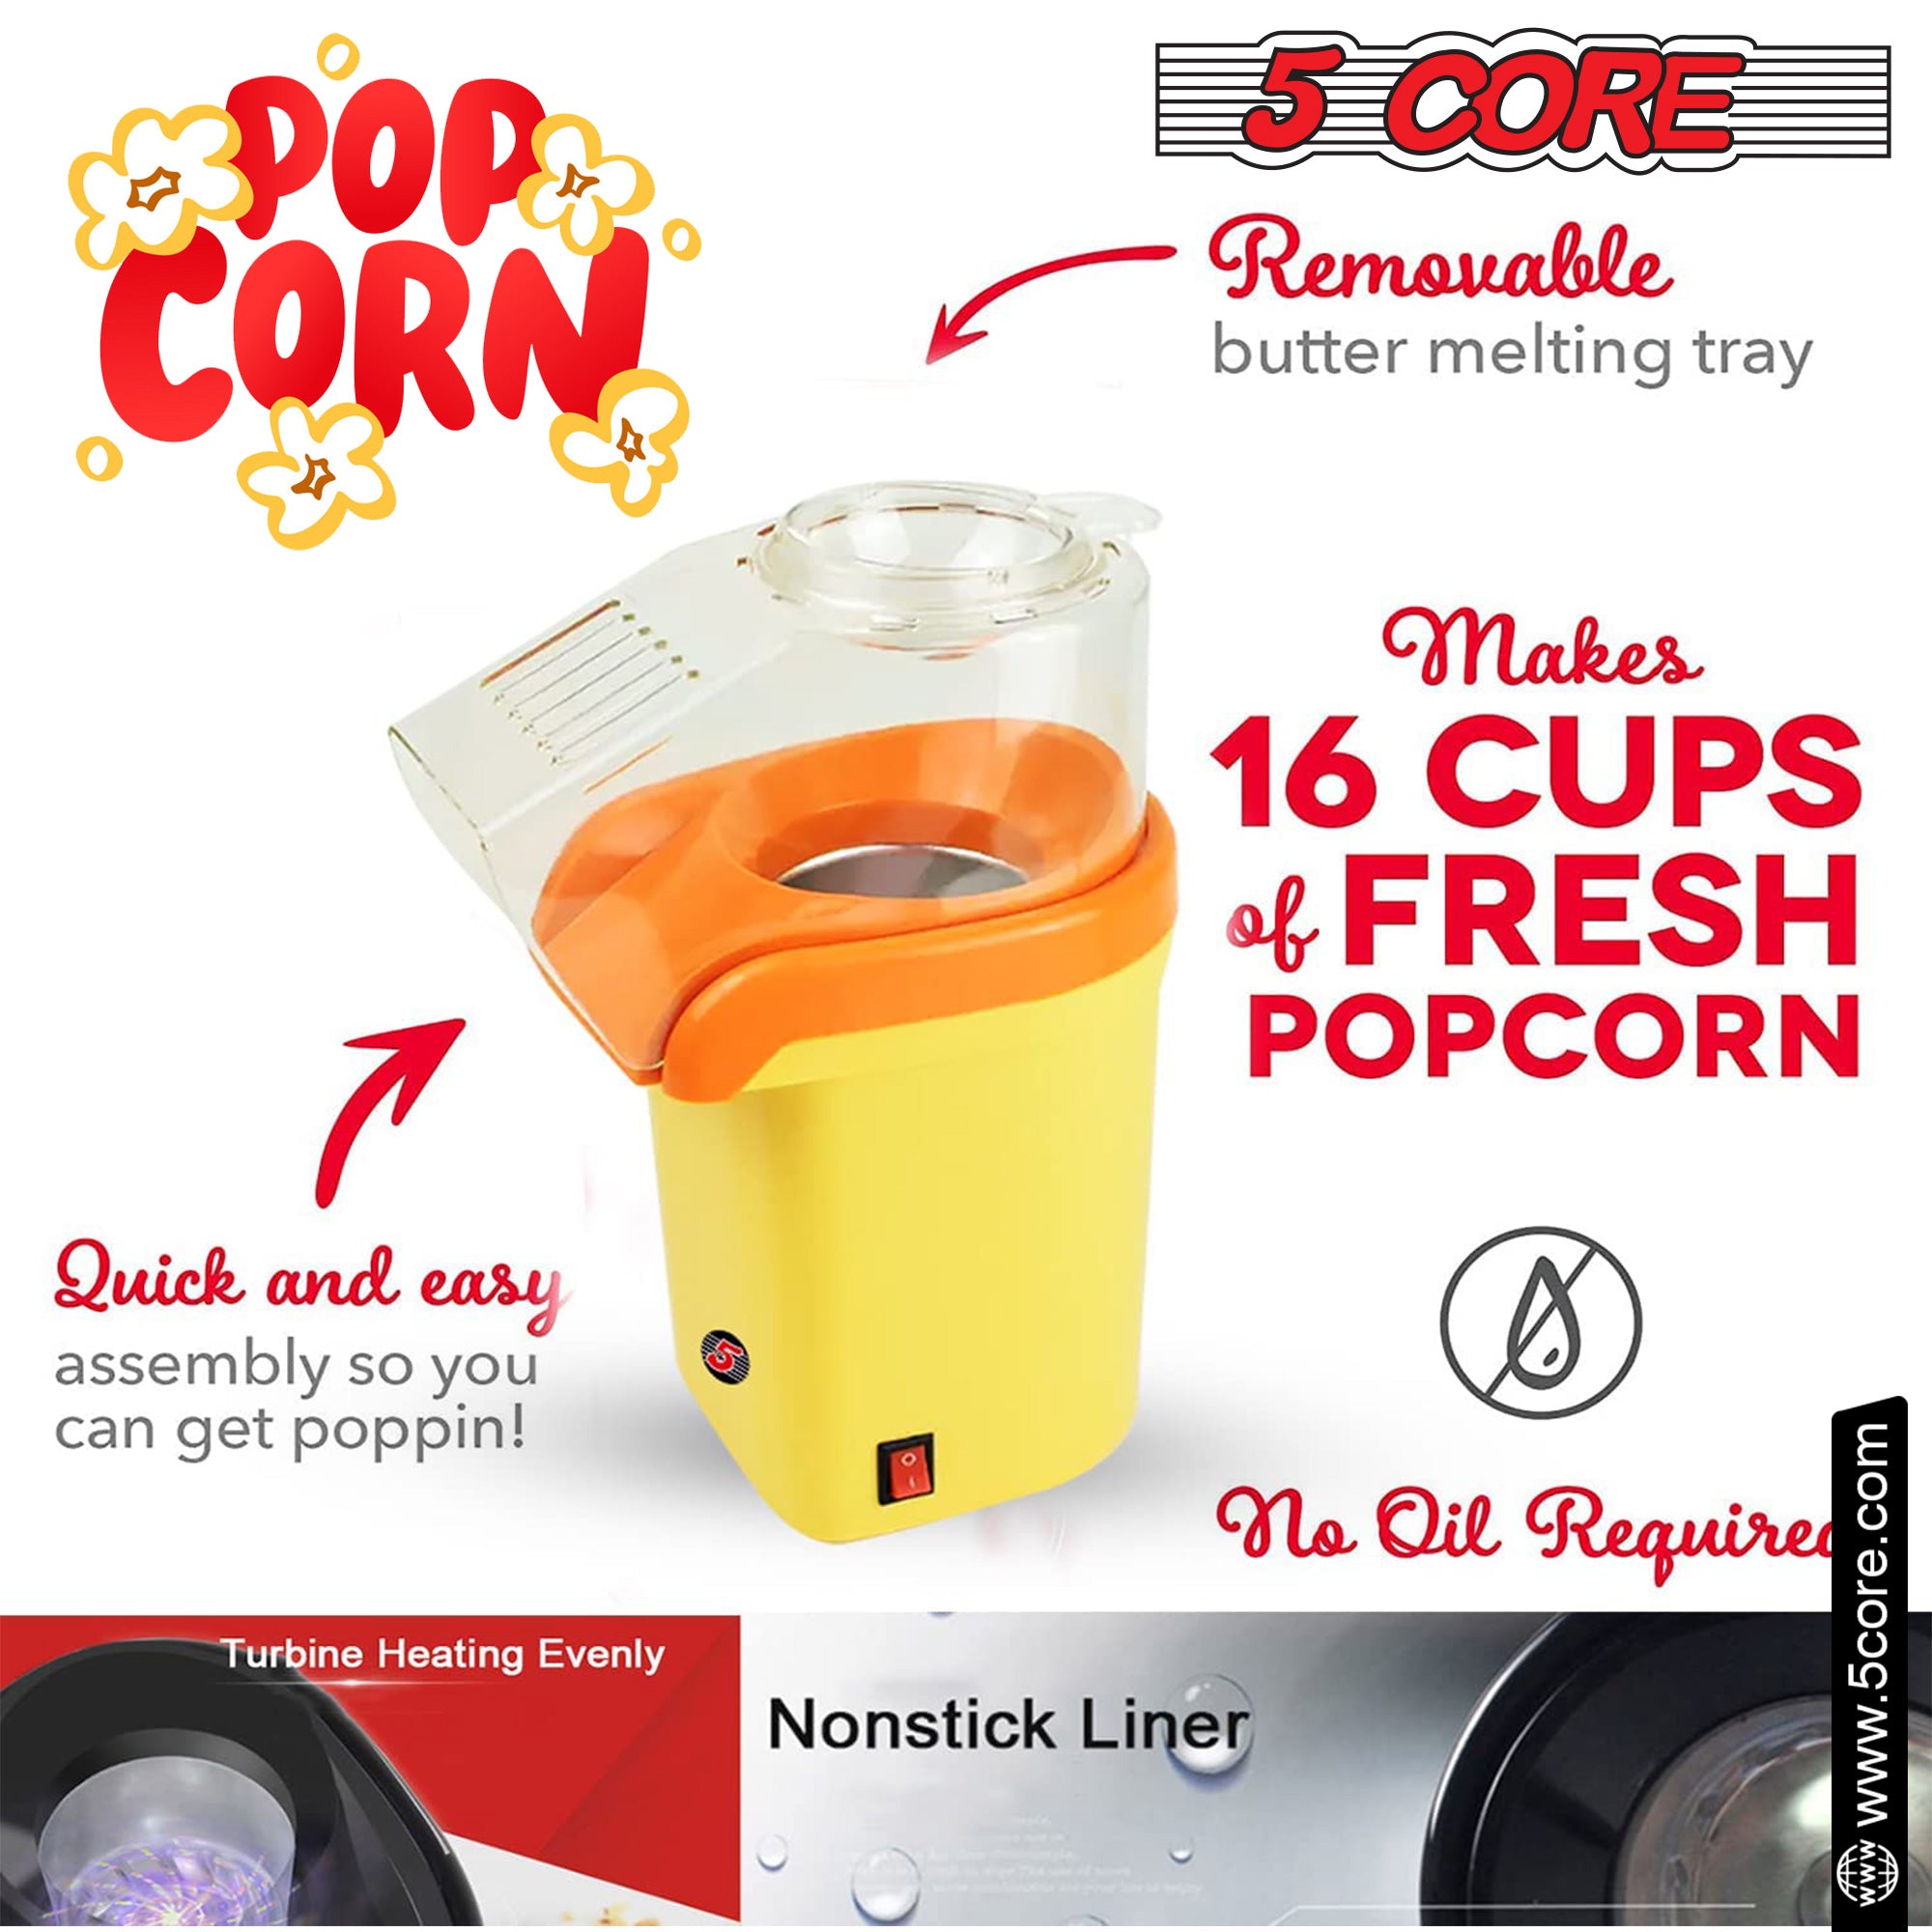 5 core Popcorn popper maker makes 16 cups of fresh popcorn.